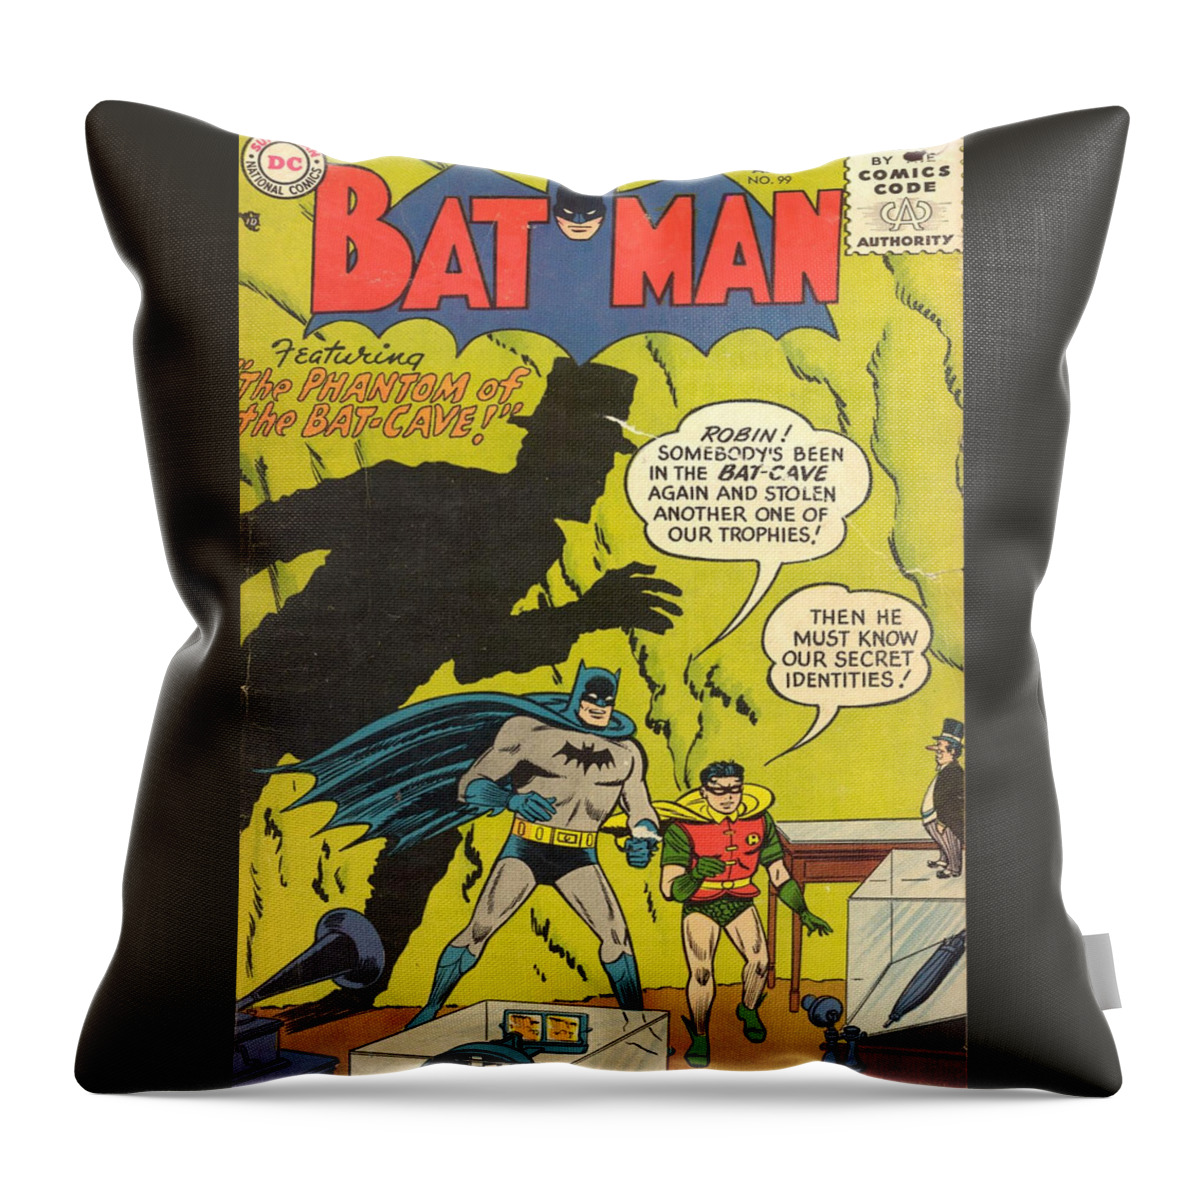 Batman Comics #99 Cover Art Throw Pillow by Tabitha Bateman - Pixels